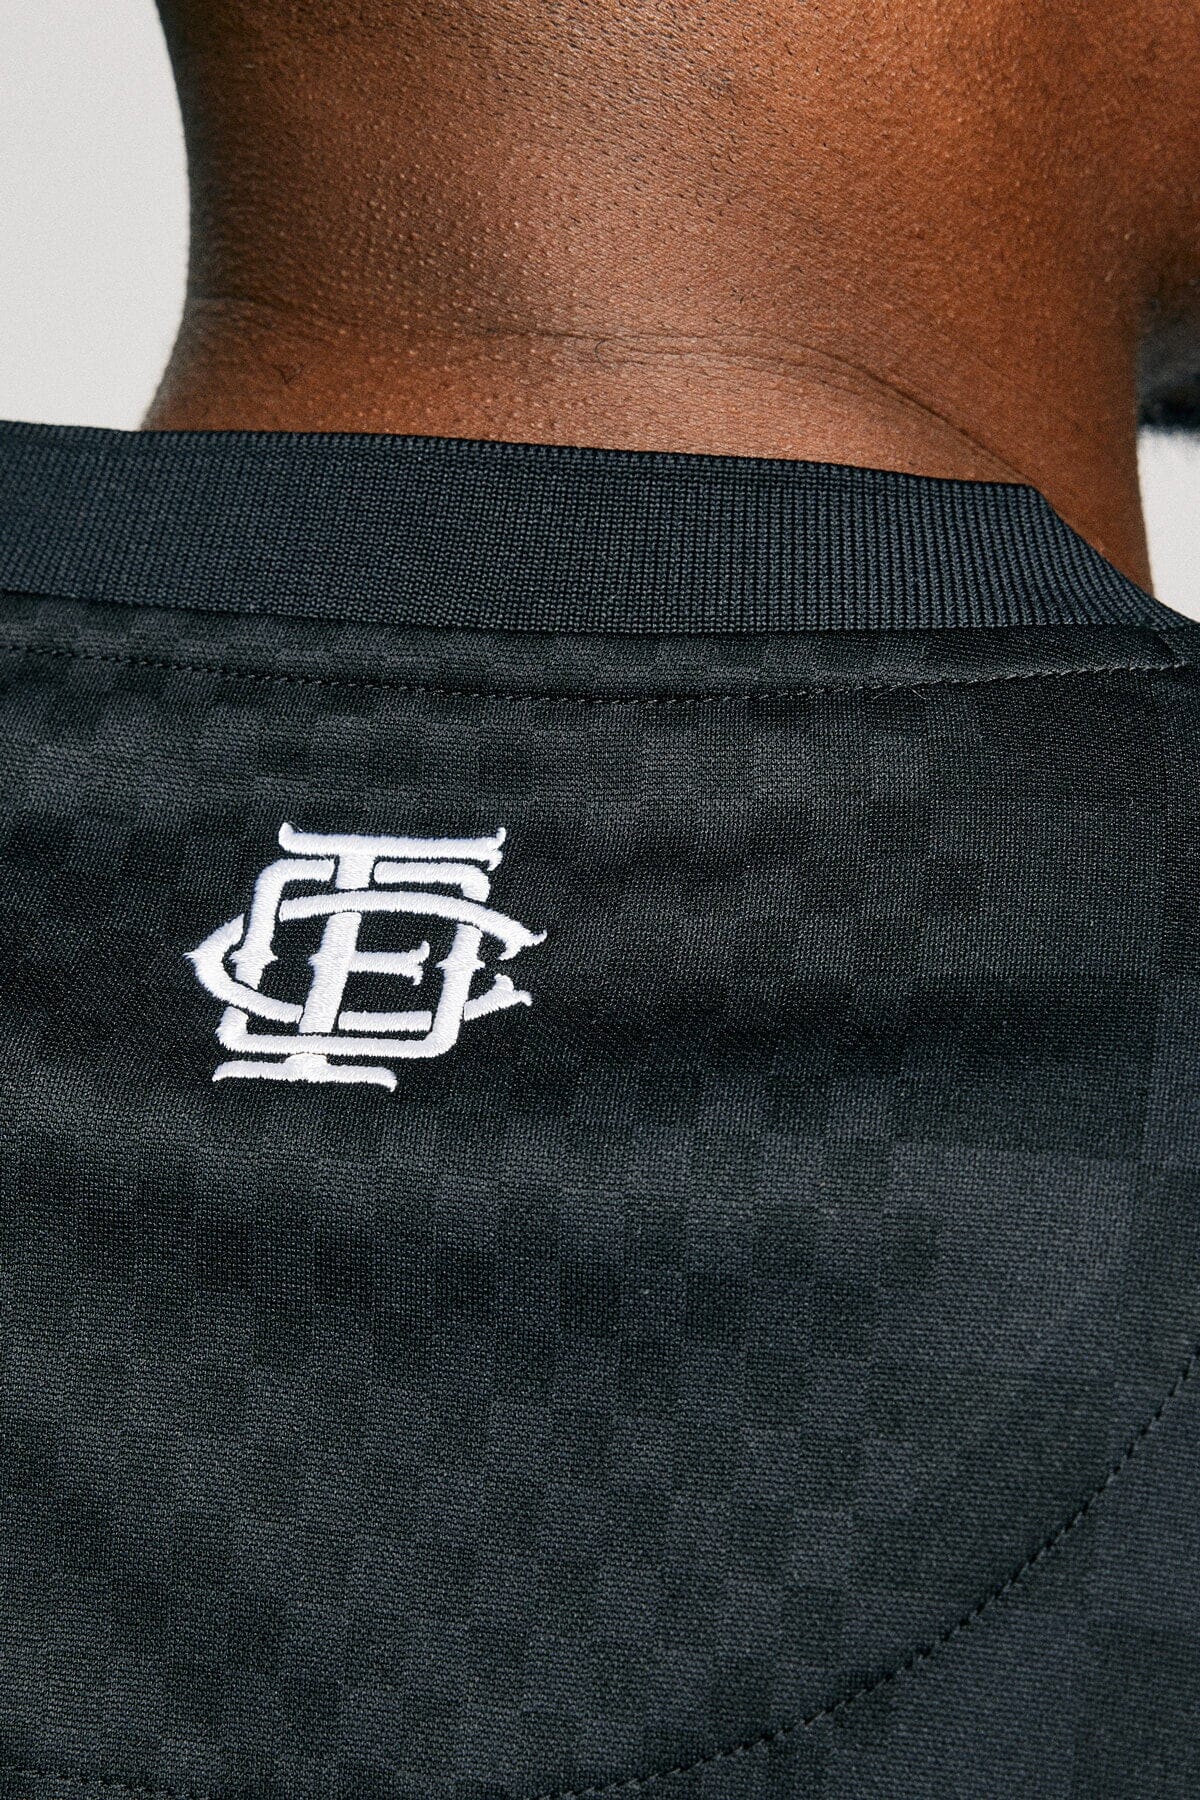 lebron black jersey